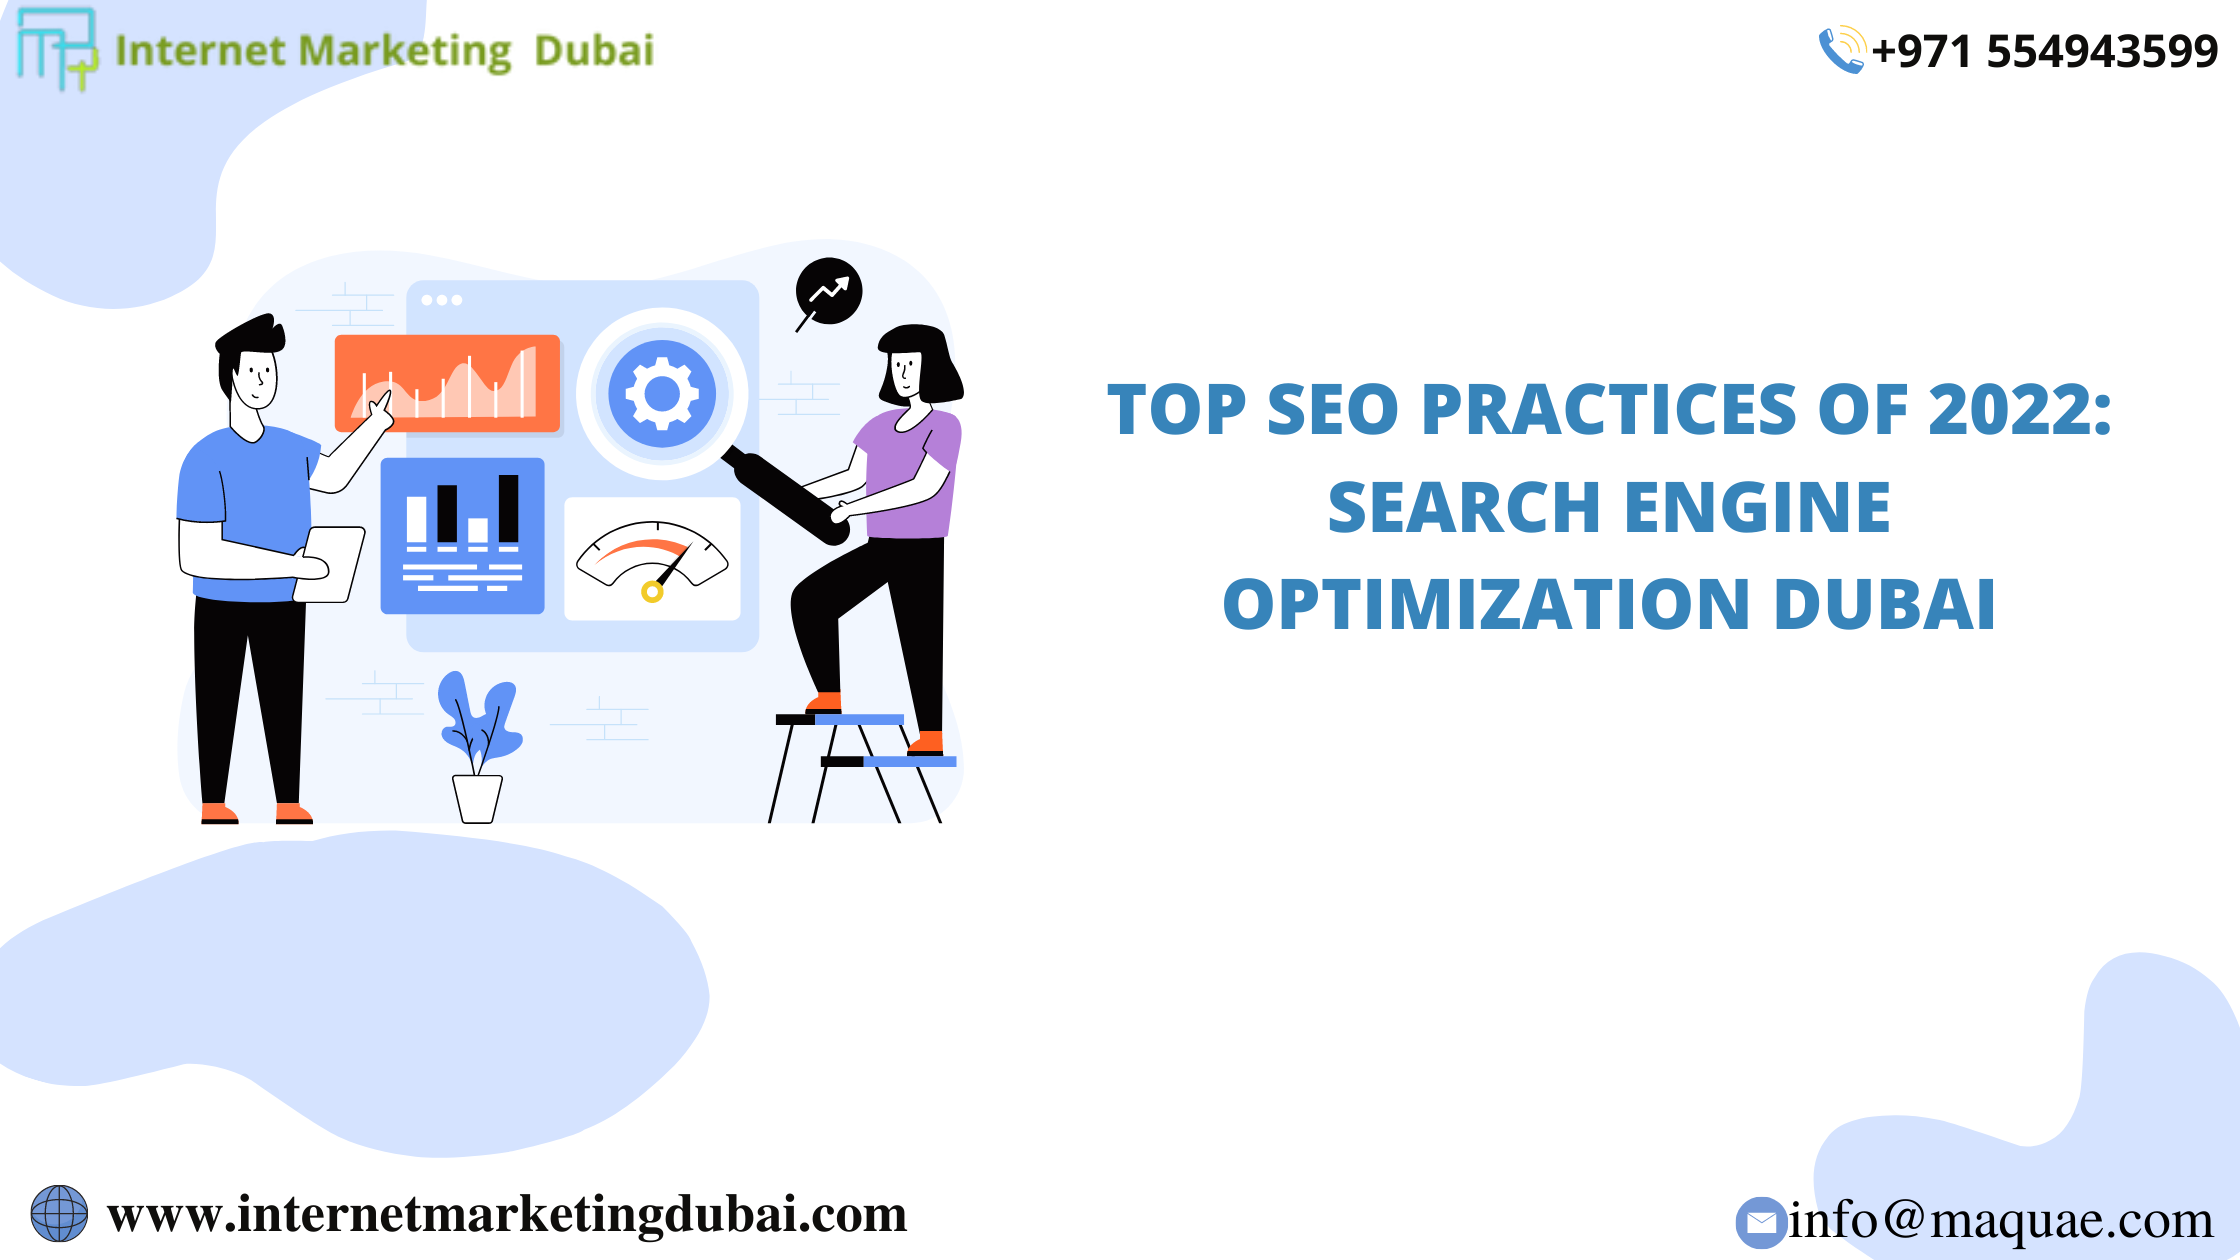 Search engine optimization Dubai